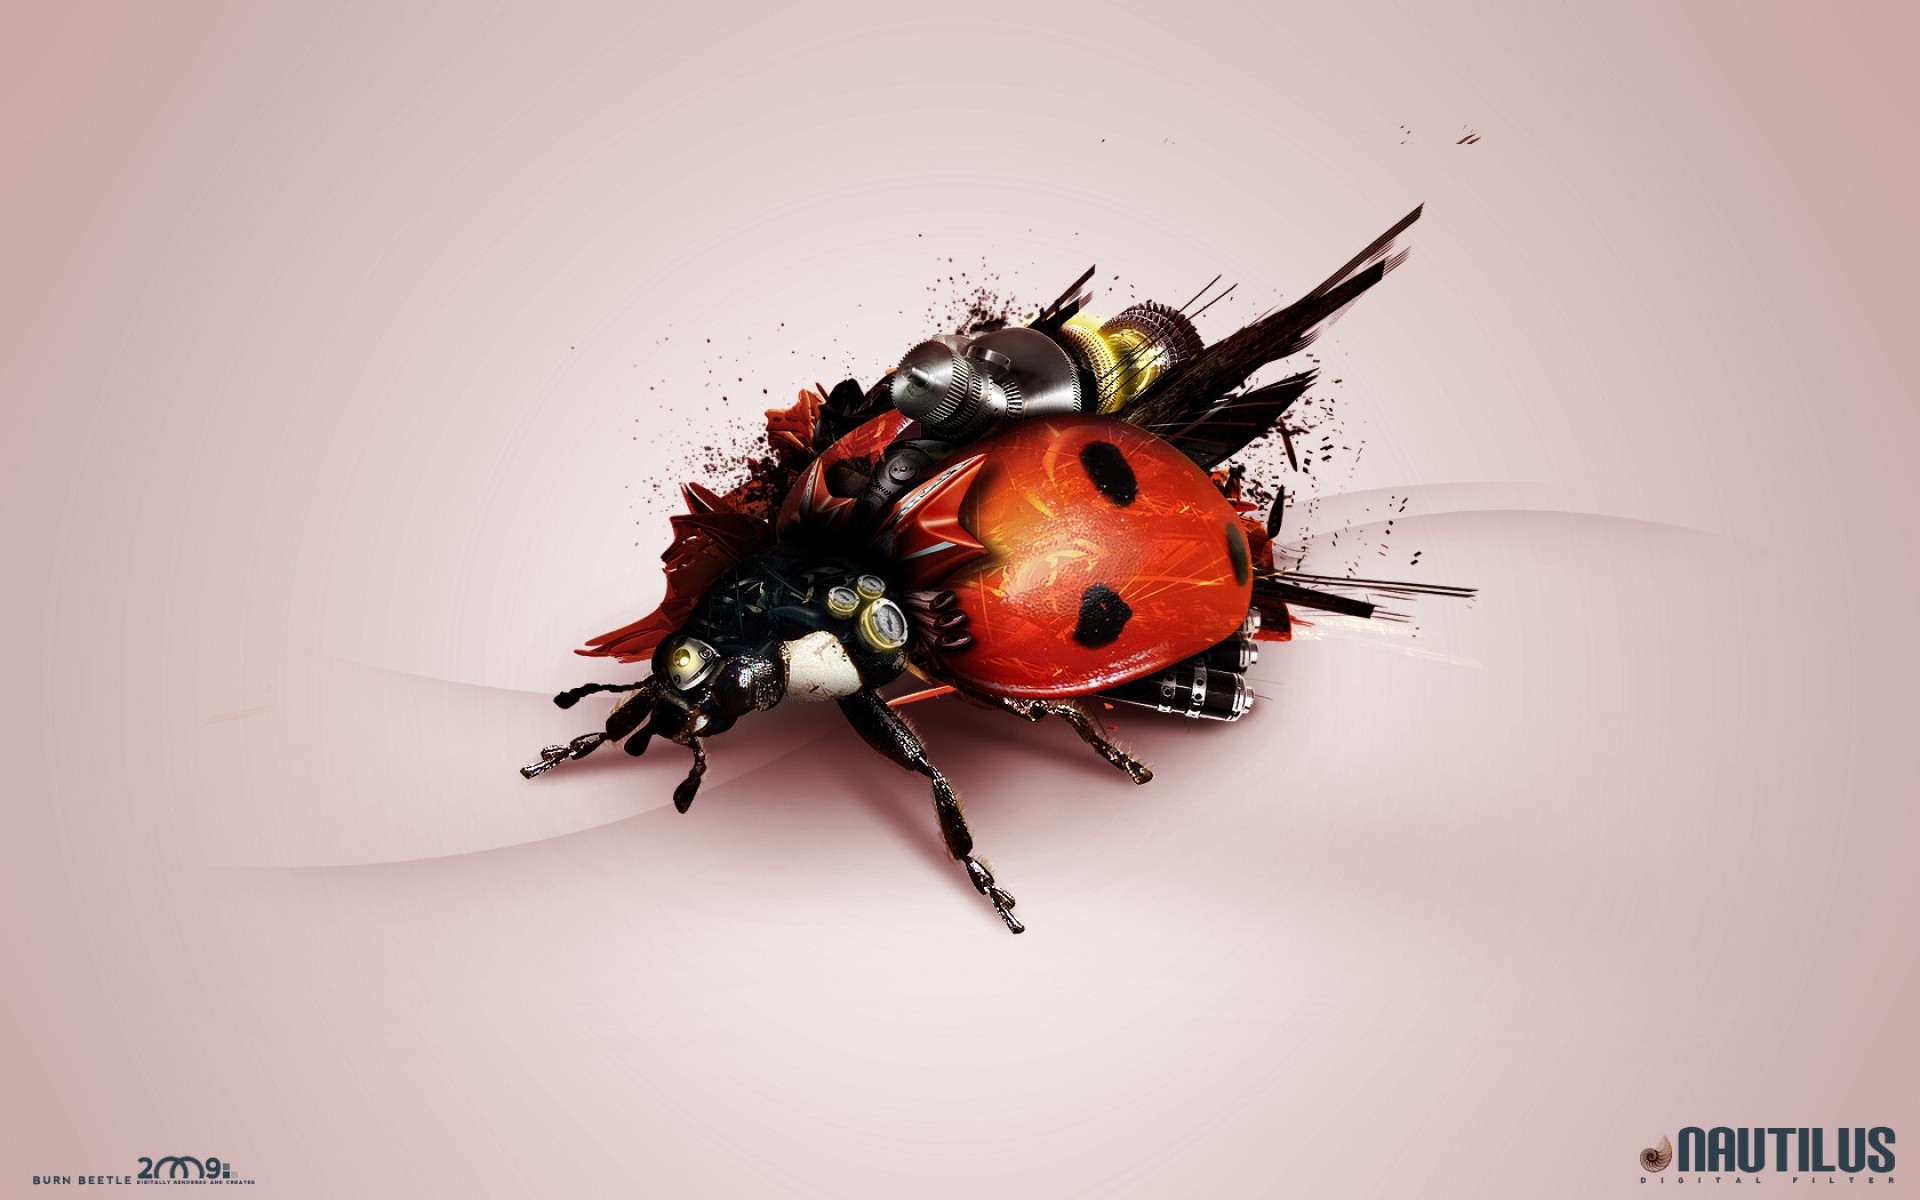 photo manipulation insect beetle biology nature ladybug little outdoors wildlife bug abstract photo manipulated